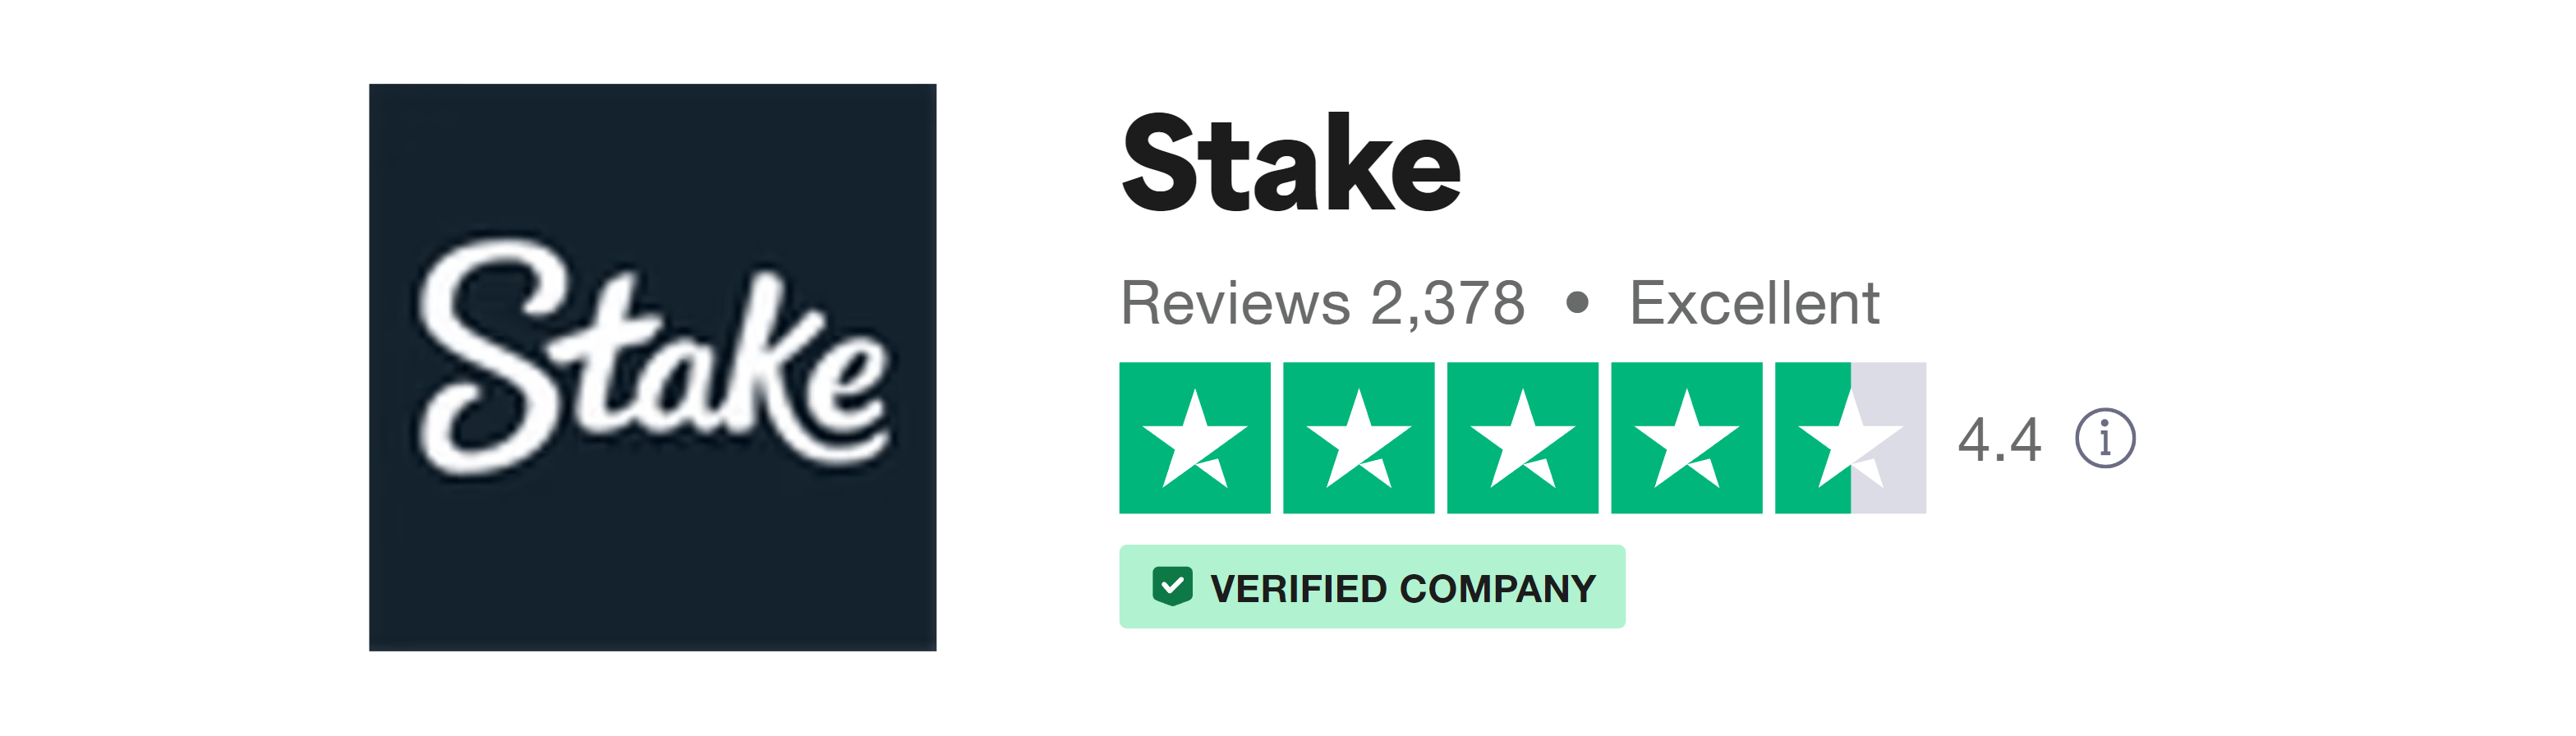 Trustpilot rating screenshot for the Stake